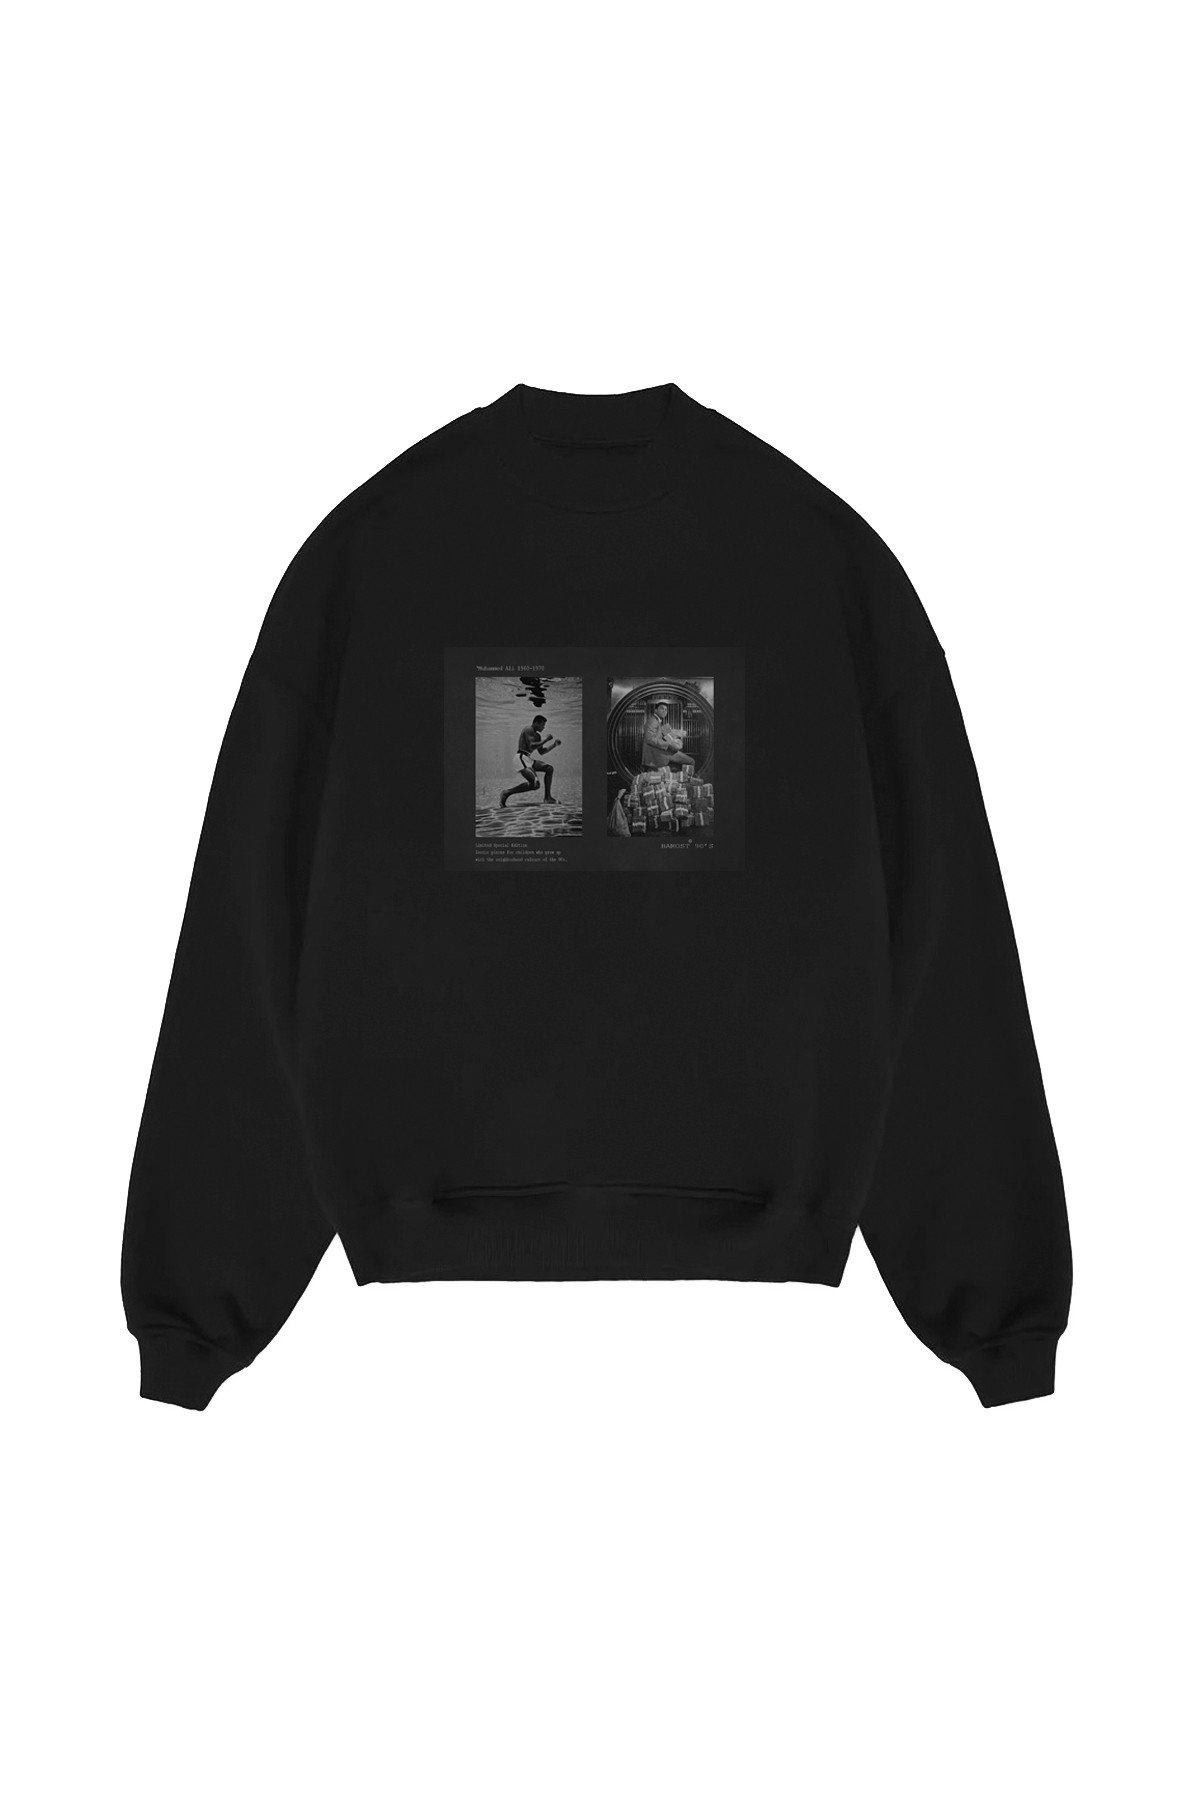 Muhammed Ali - 90'S Club Oversize Sweatshirt - BLACK